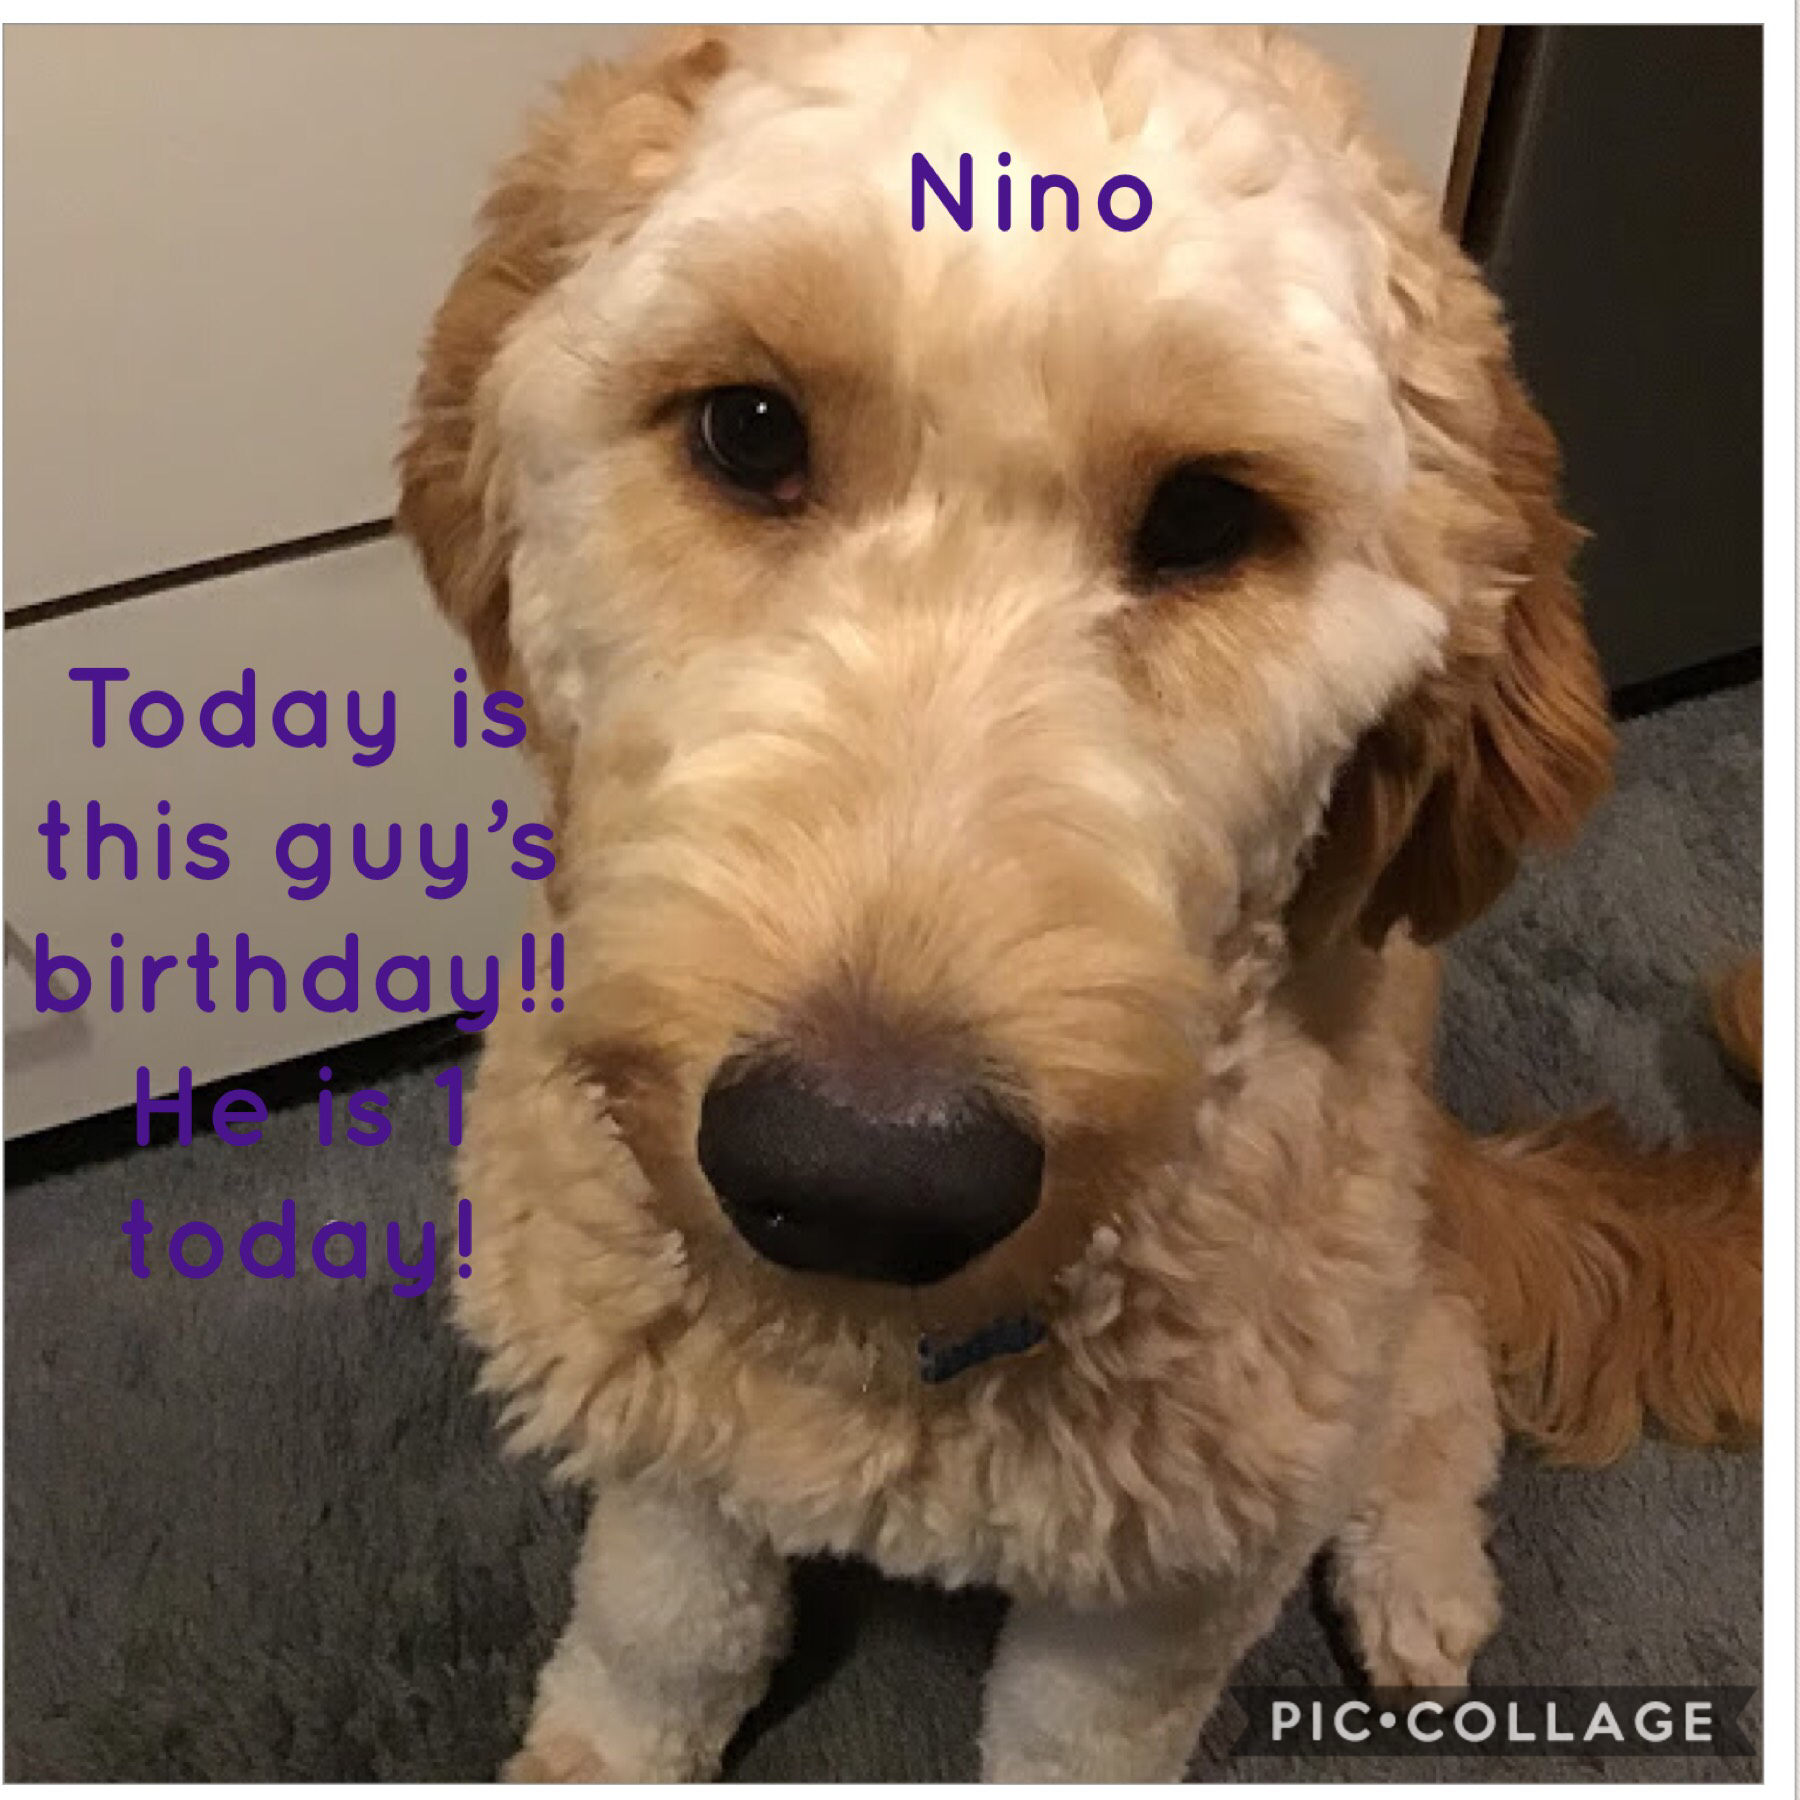 My pup Nino is turning 1!!!❤️